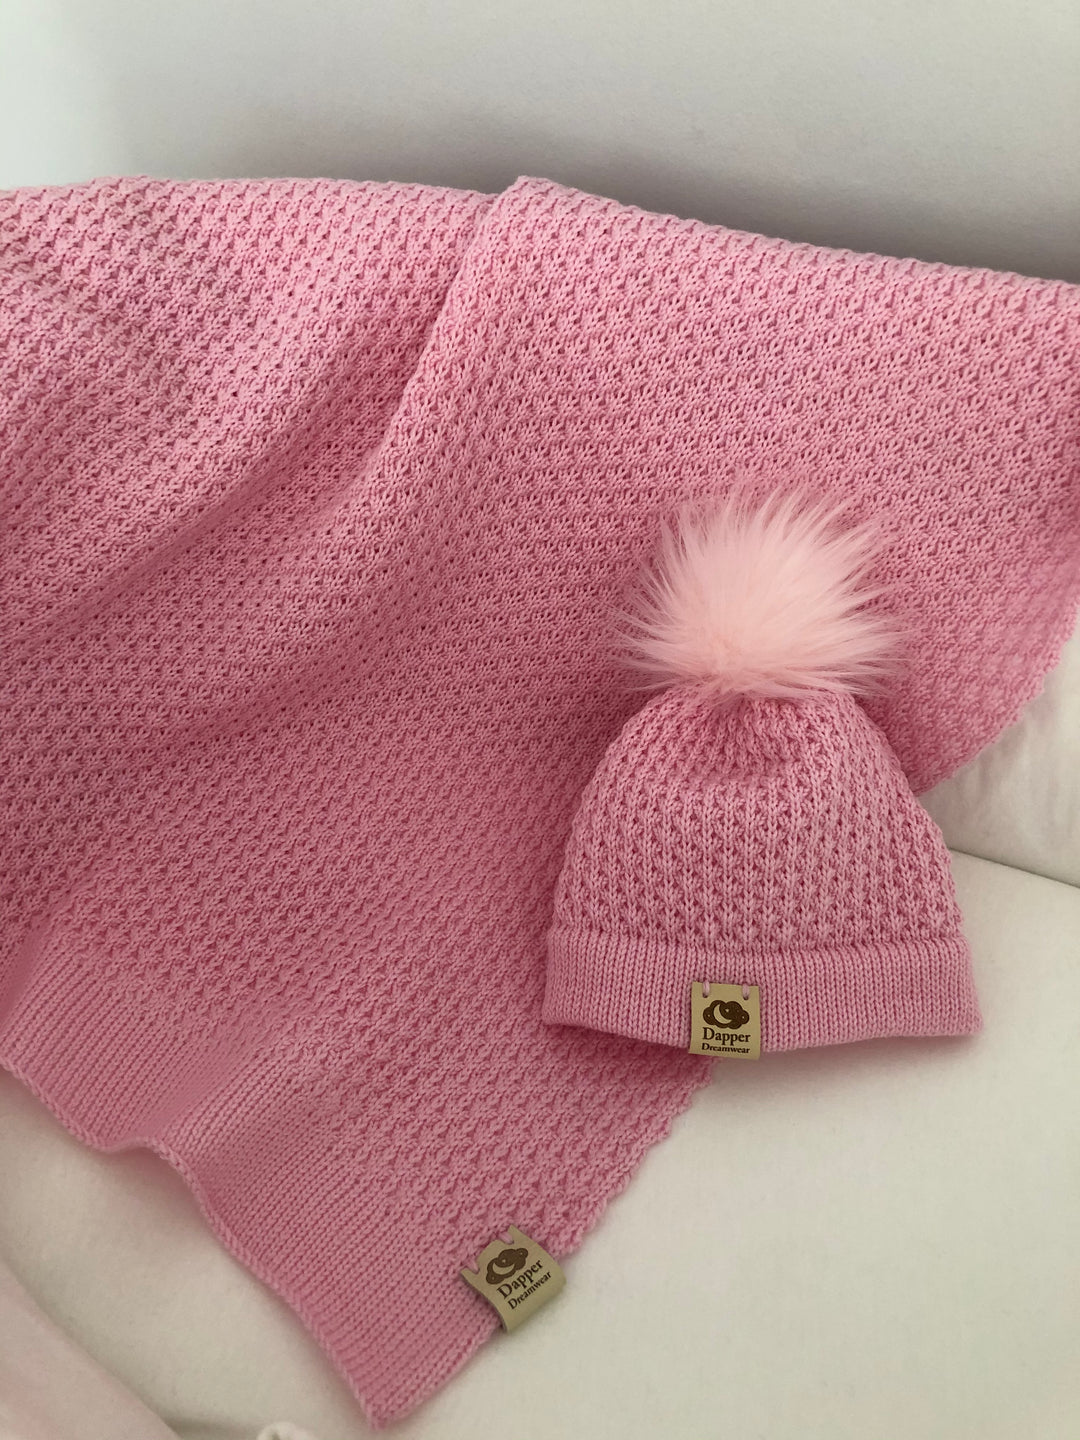 Dapper Dreamwear Merino Baby Blanket and Hat Gift Set